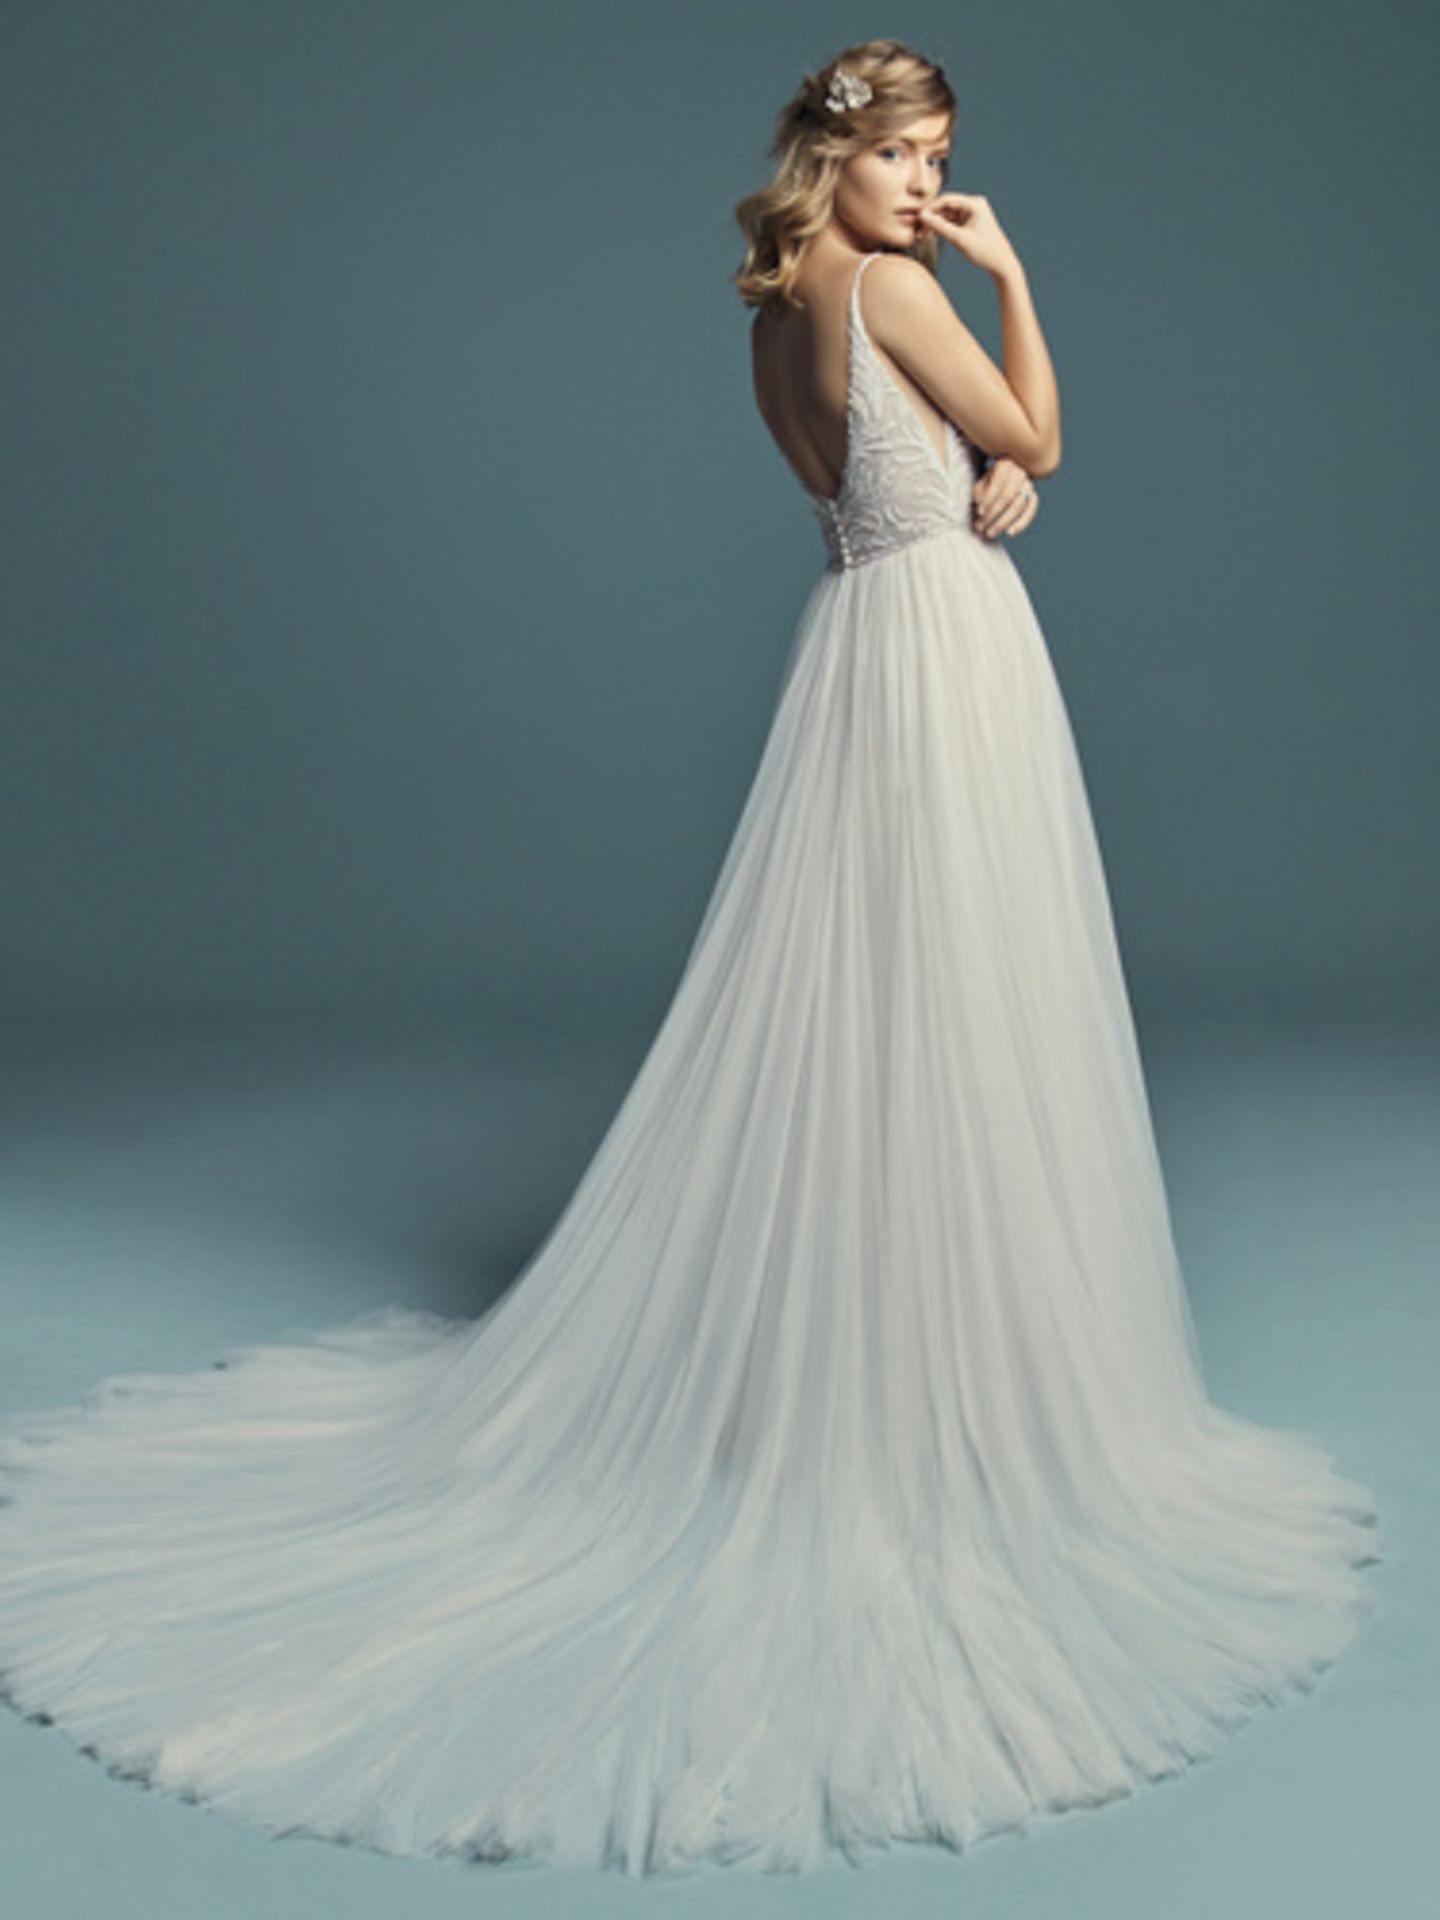 1 x MAGGIE SOTTERO 'Charlene' Boho-Style Aline Designer Wedding Dress Bridal Gown - RRP £1,900 - Image 5 of 15